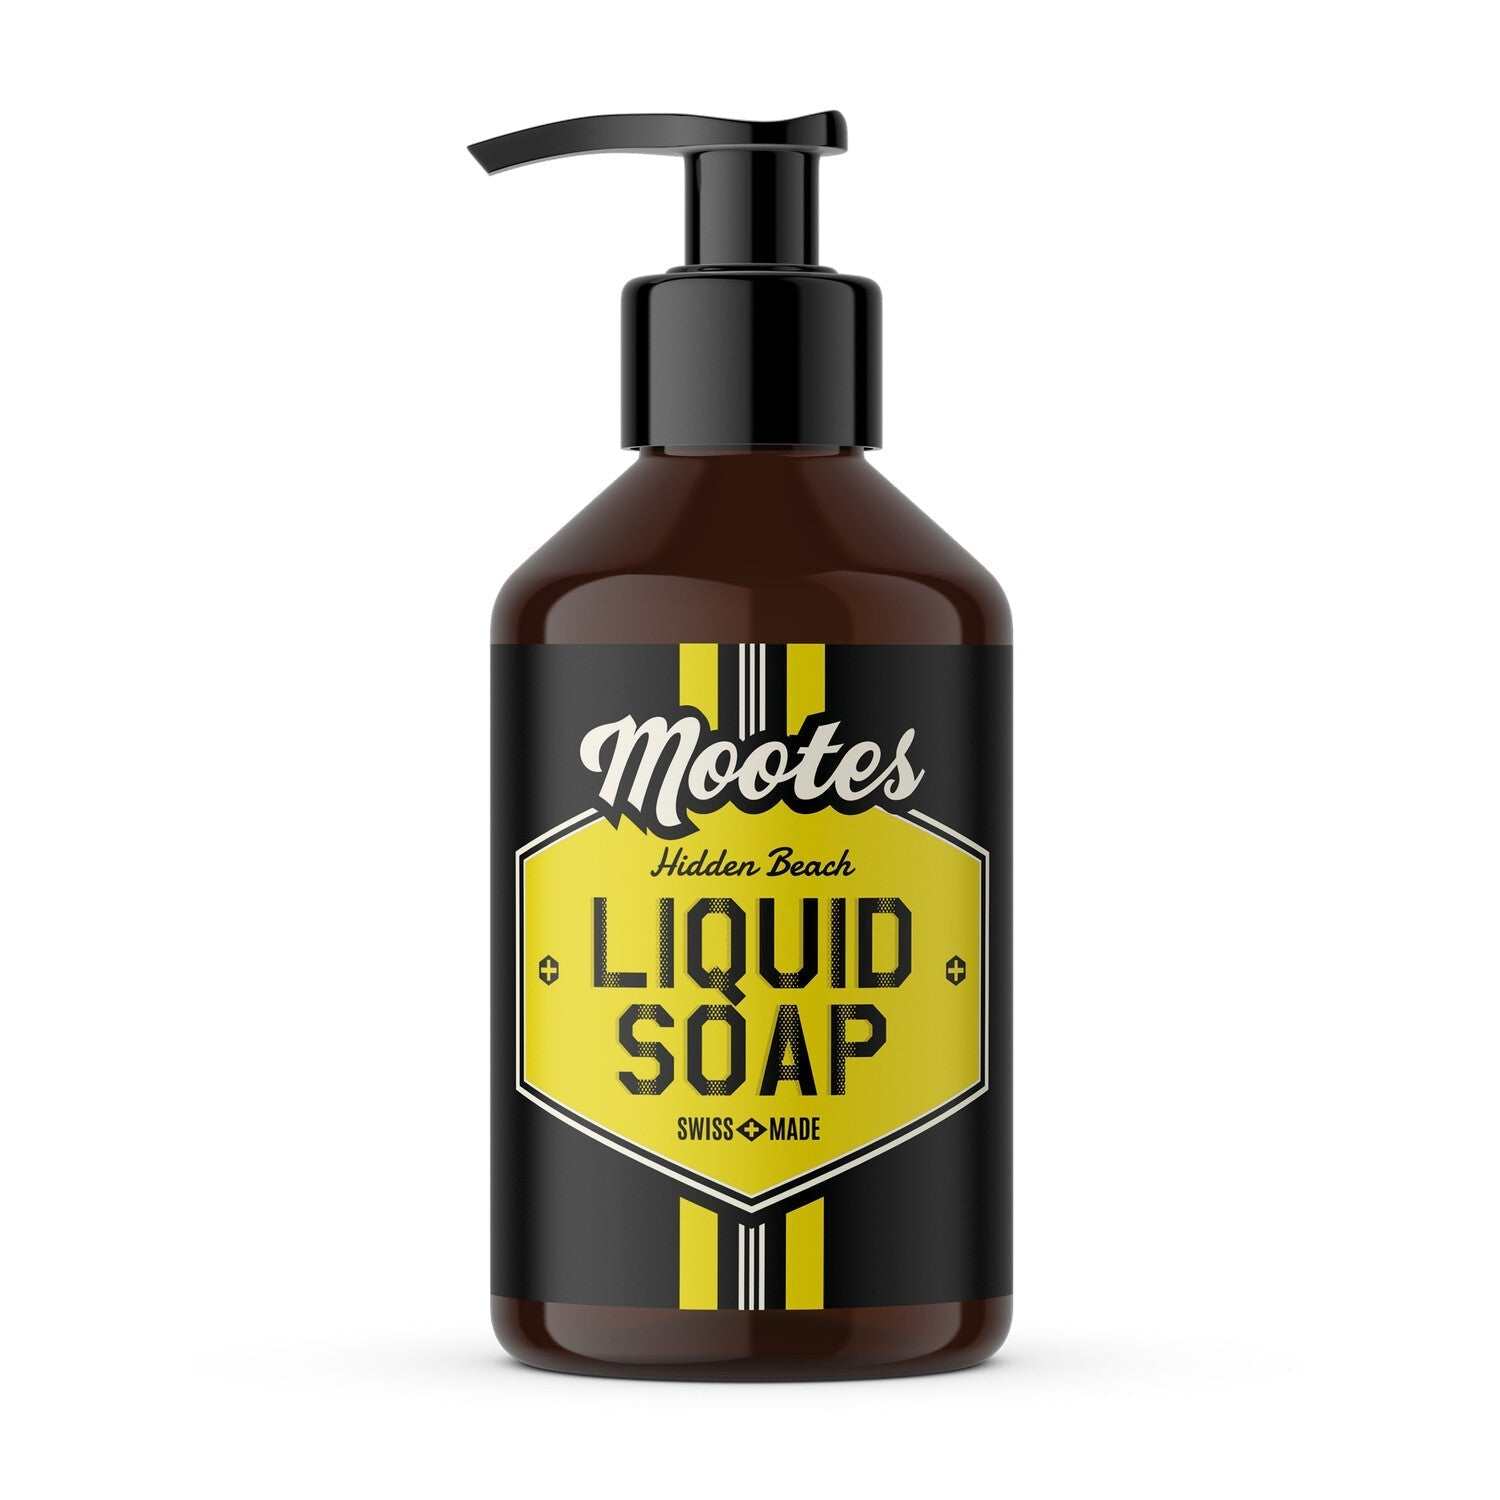 Mootes Liquid Soap Hidden Beach